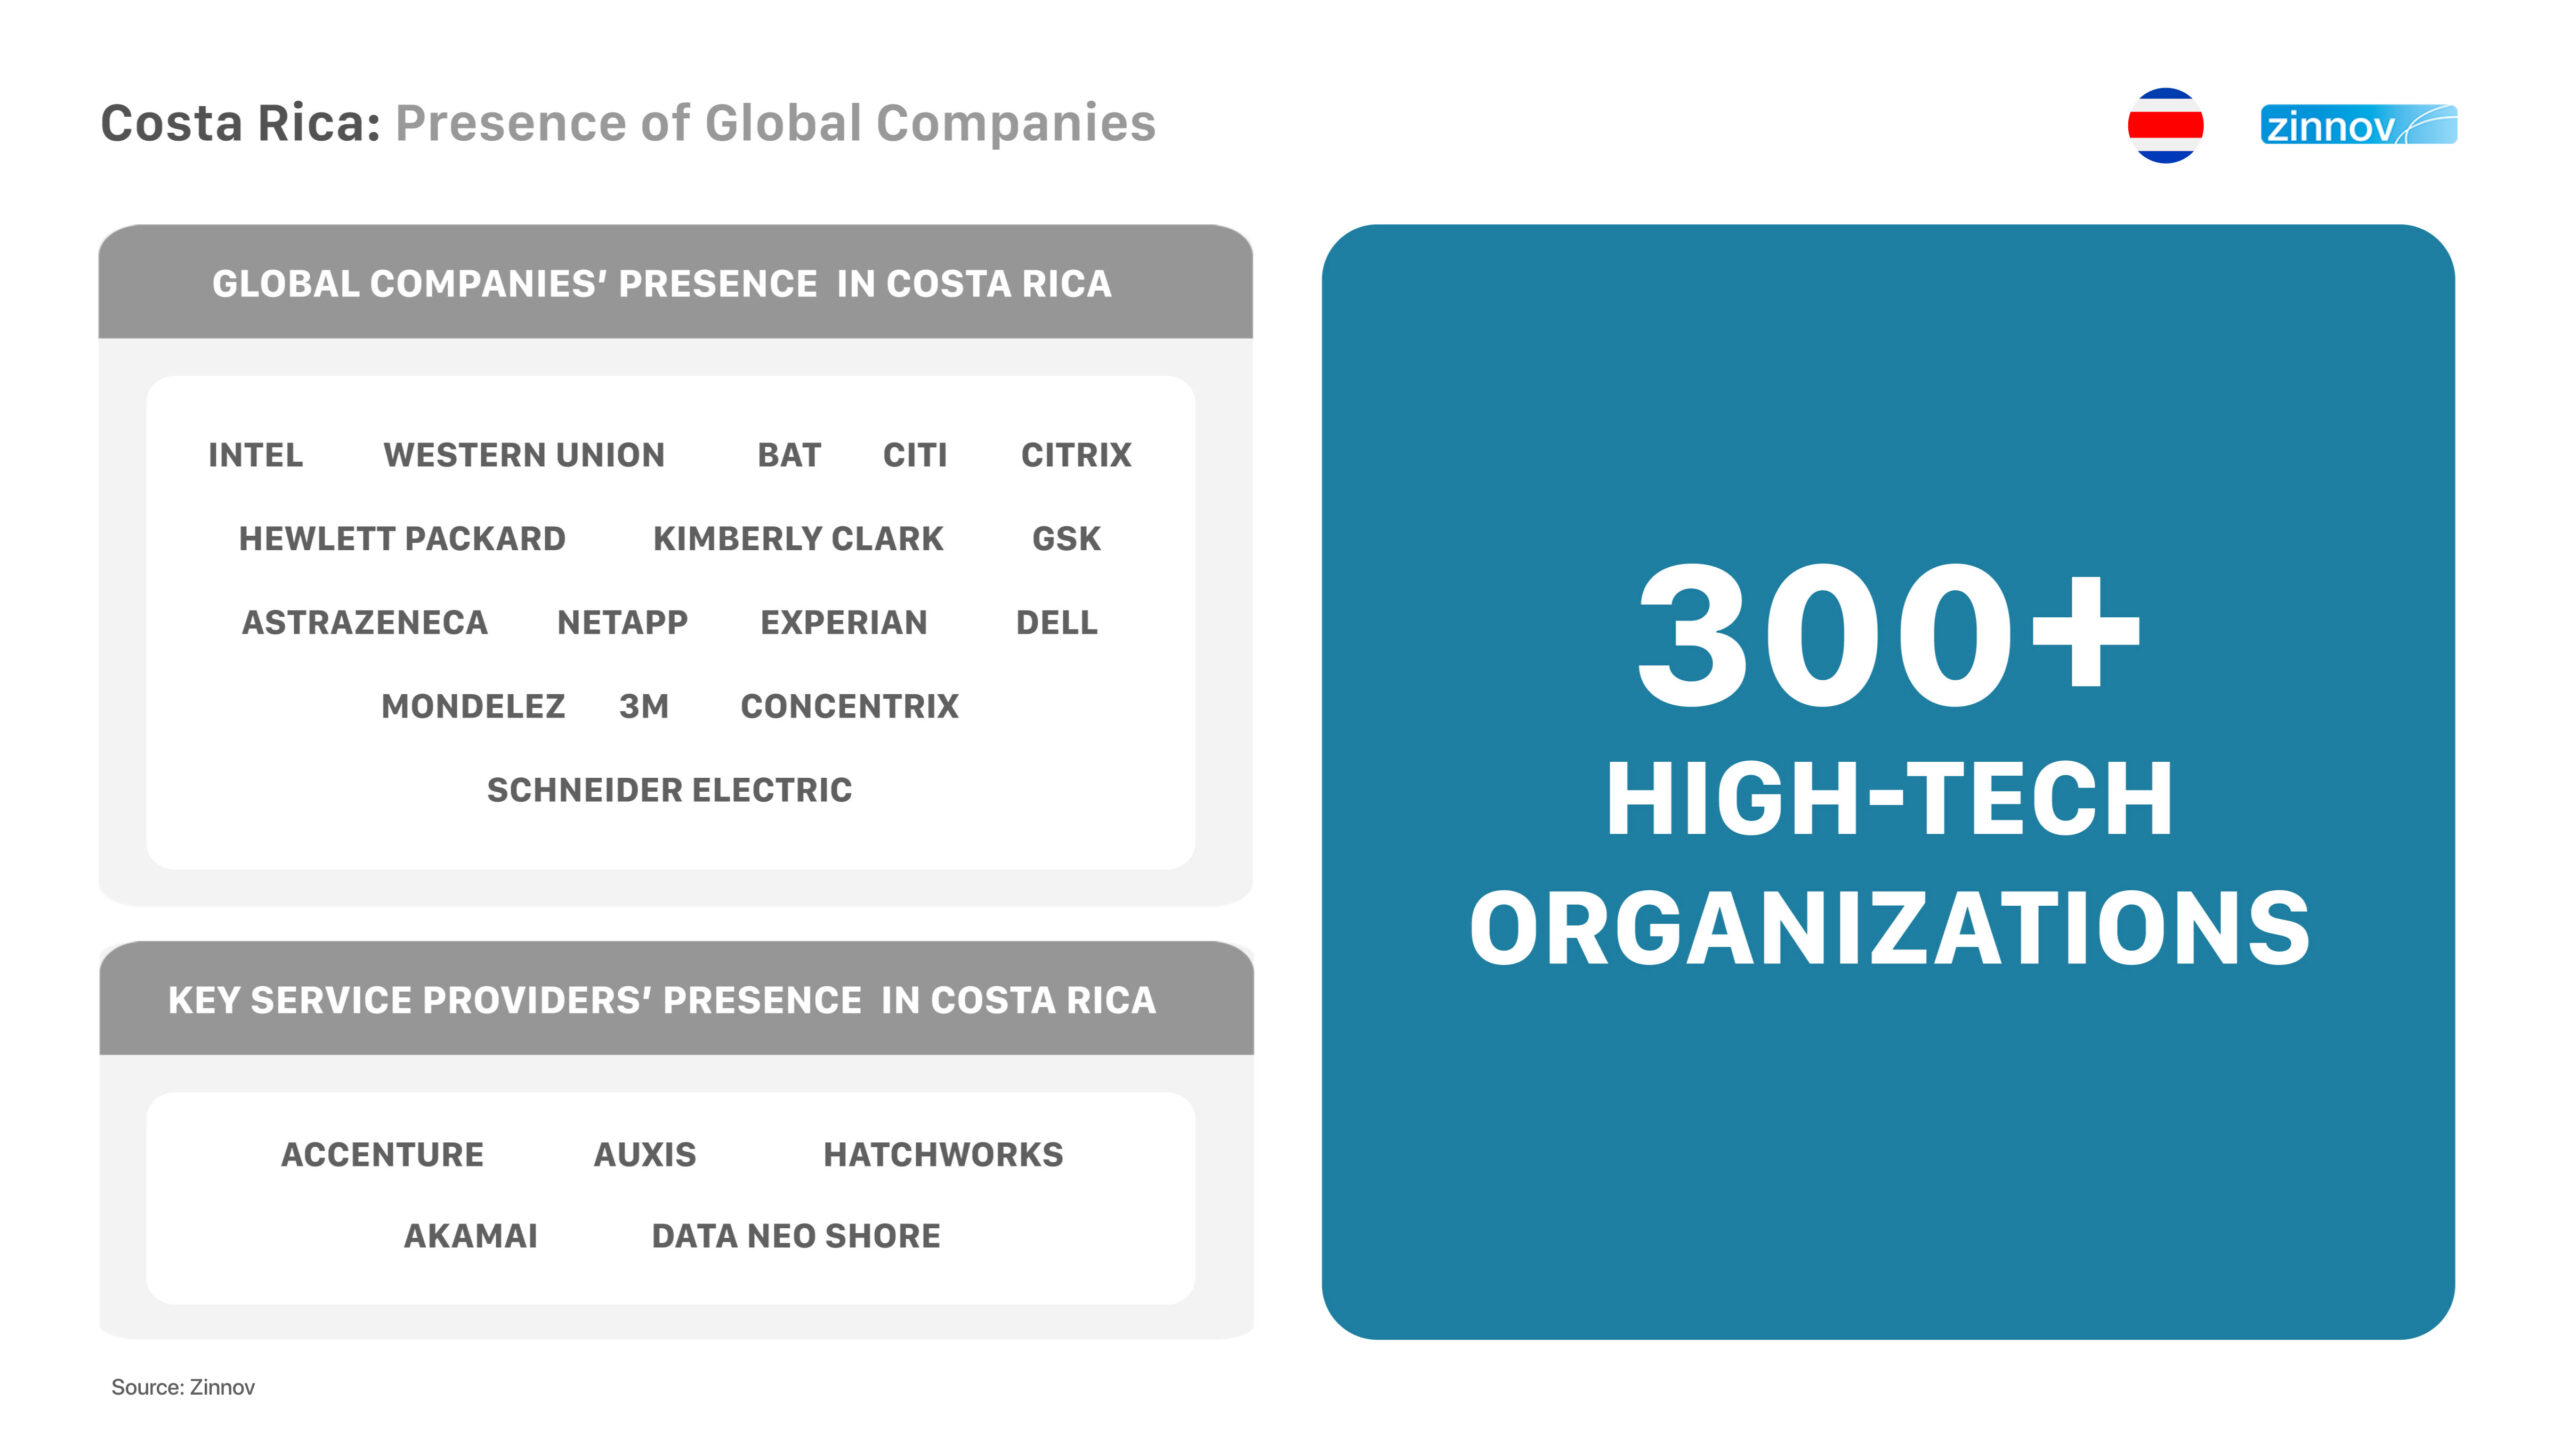 Presence of global companies in Costa Rica